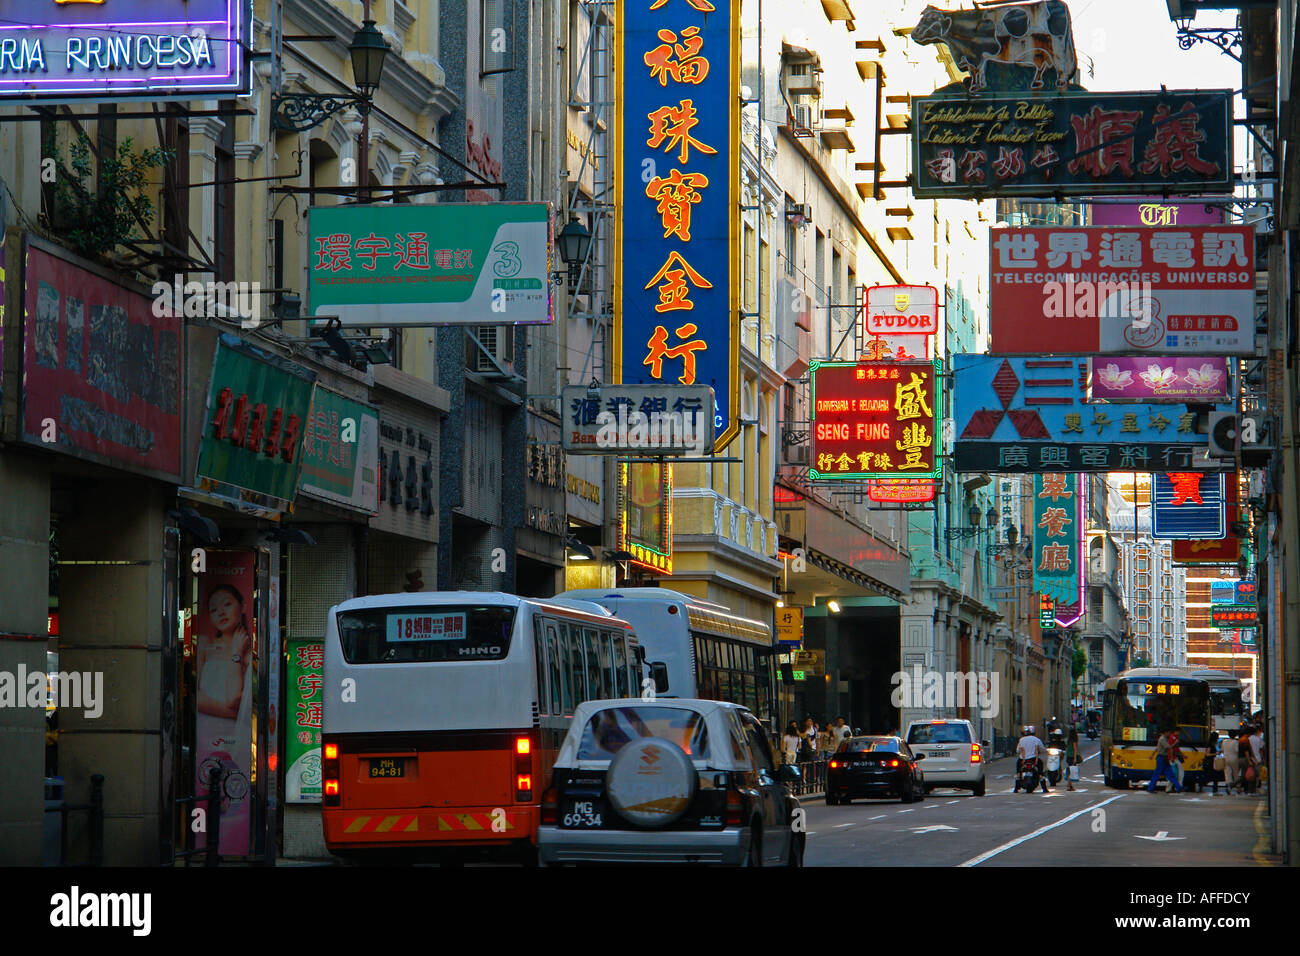 Avenida Almeida Ribeiro Street scene in Macau China Stock Photo